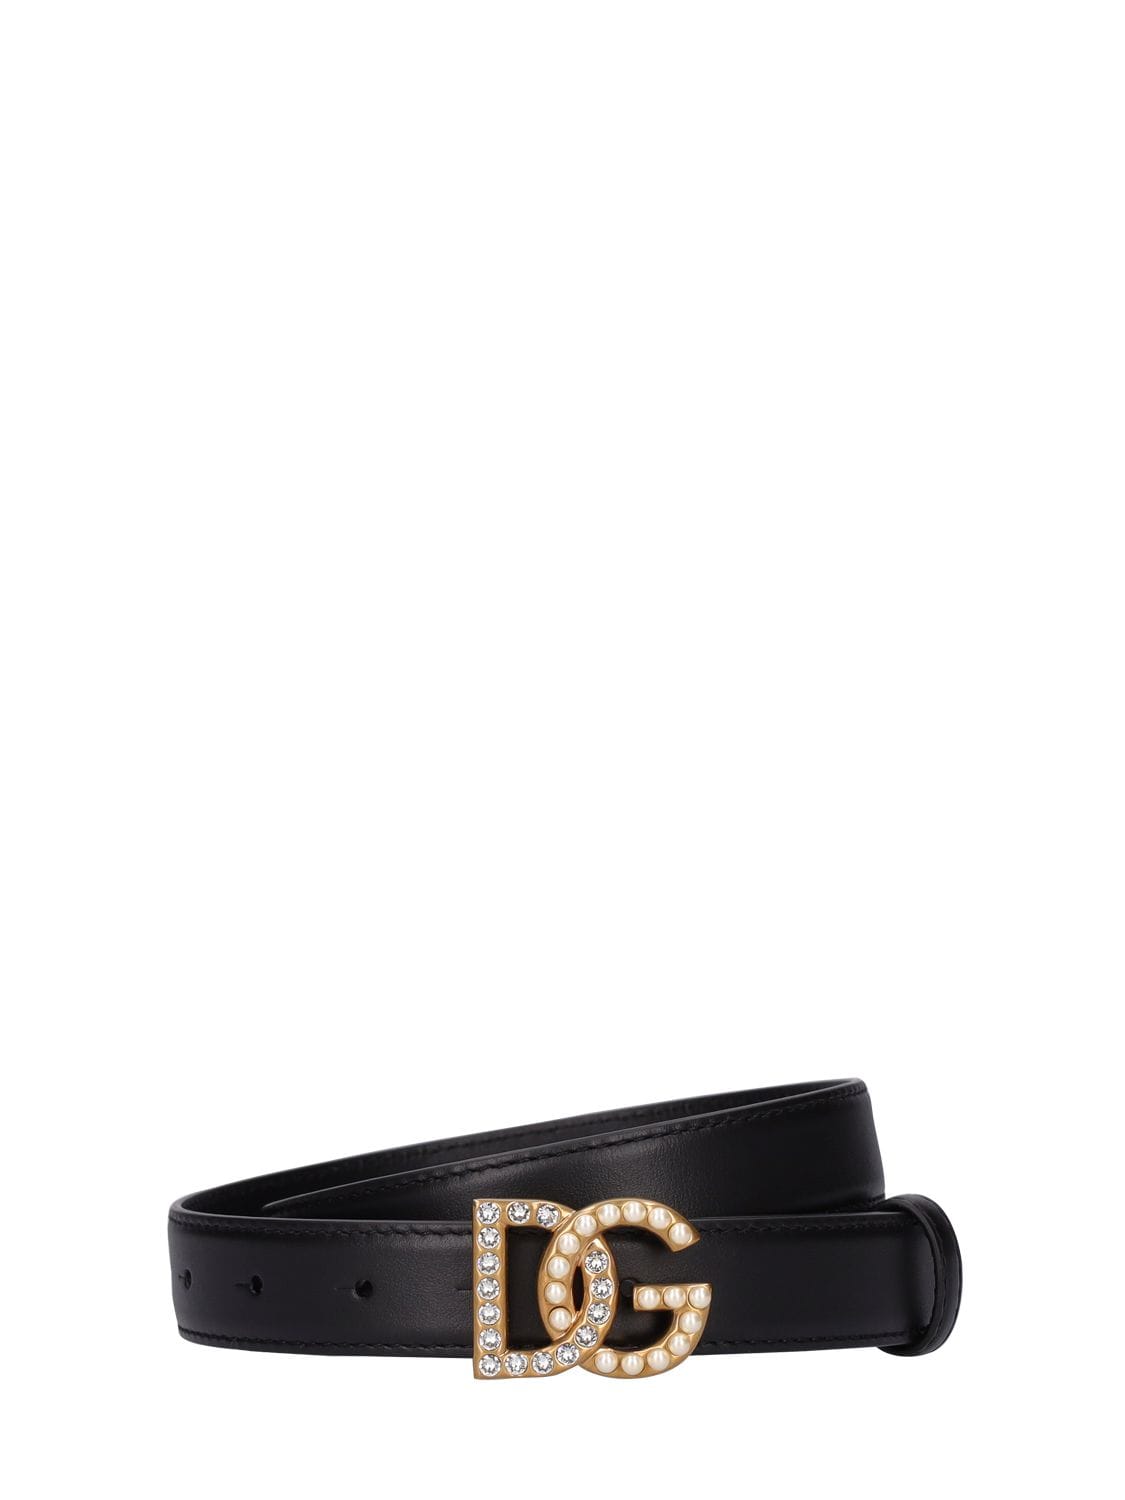 Dolce & Gabbana Dg 40mm Swarovski Crystal & Pearl Leather Belt In Black